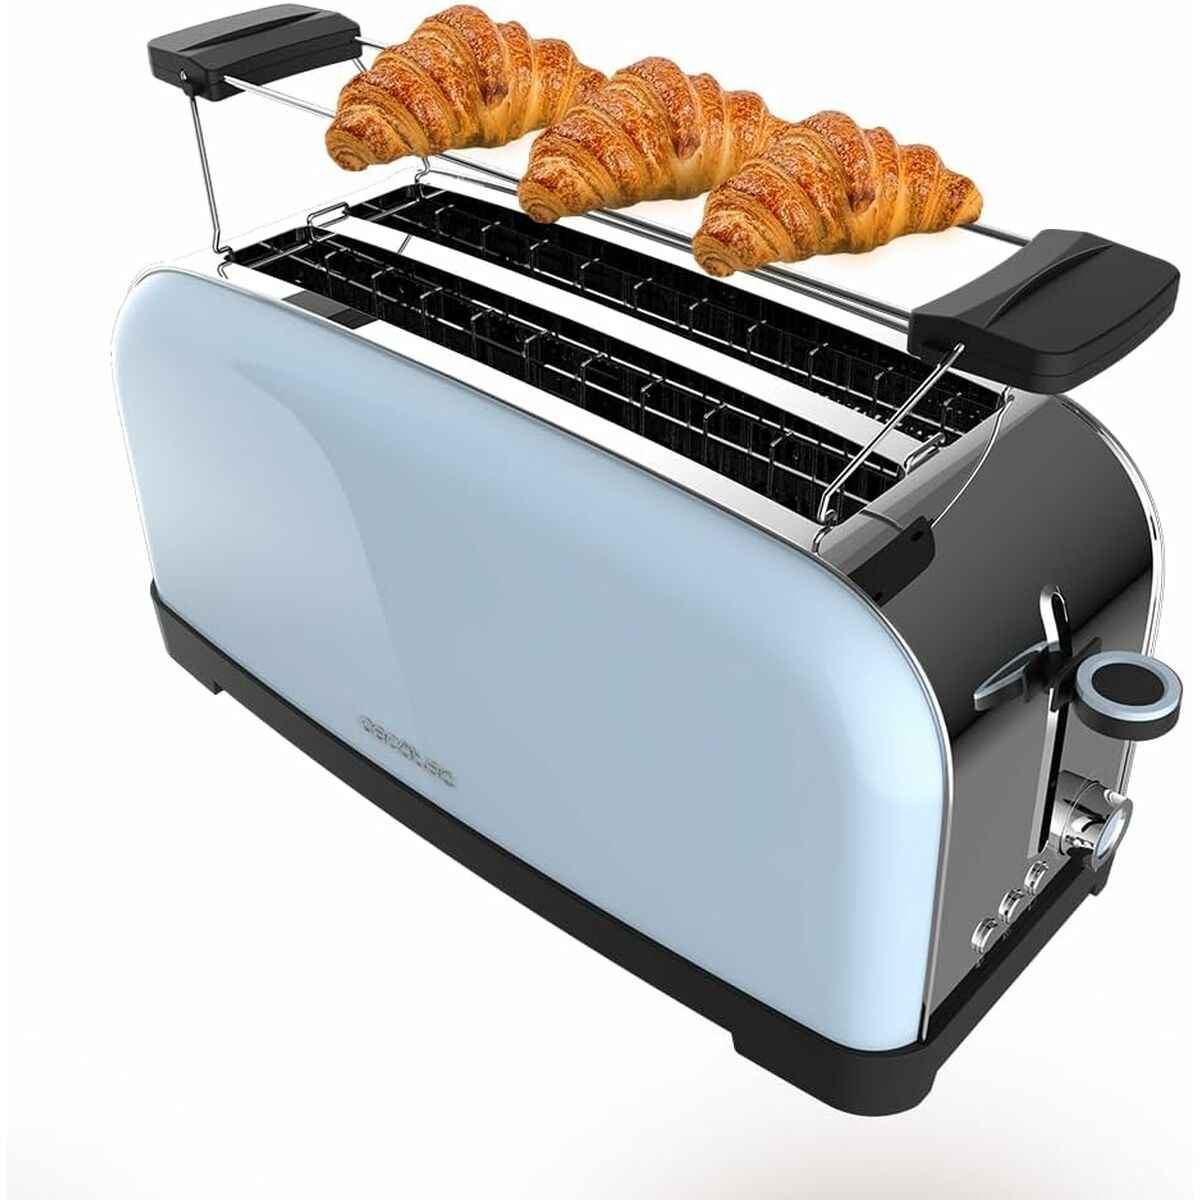 Toaster Cecotec Toastin' time 1500 1500 W - CA International 